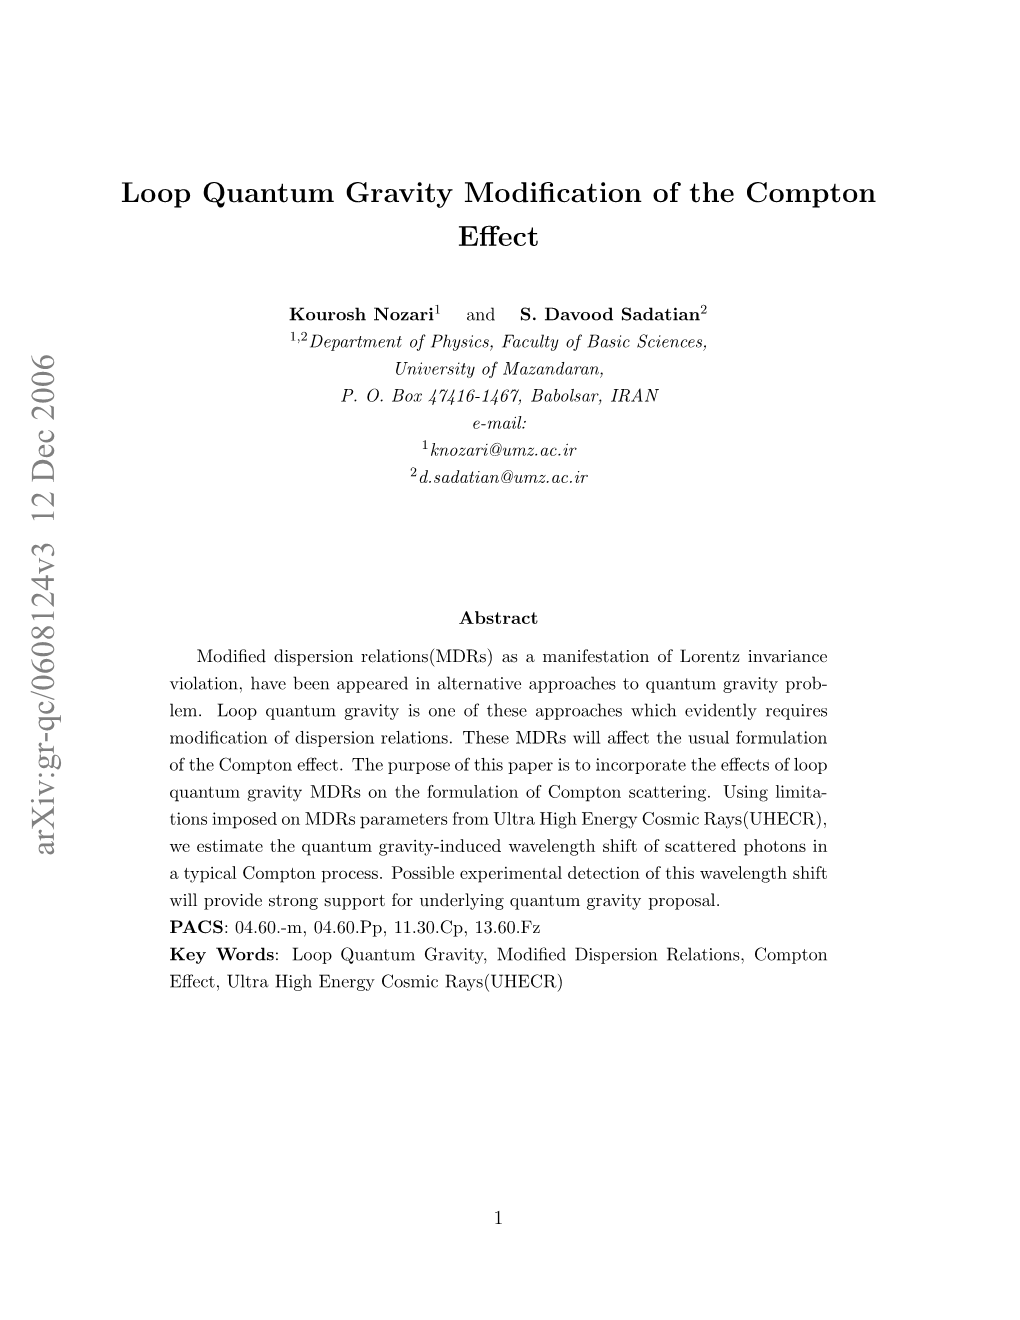 Loop Quantum Gravity Modification of the Compton Effect